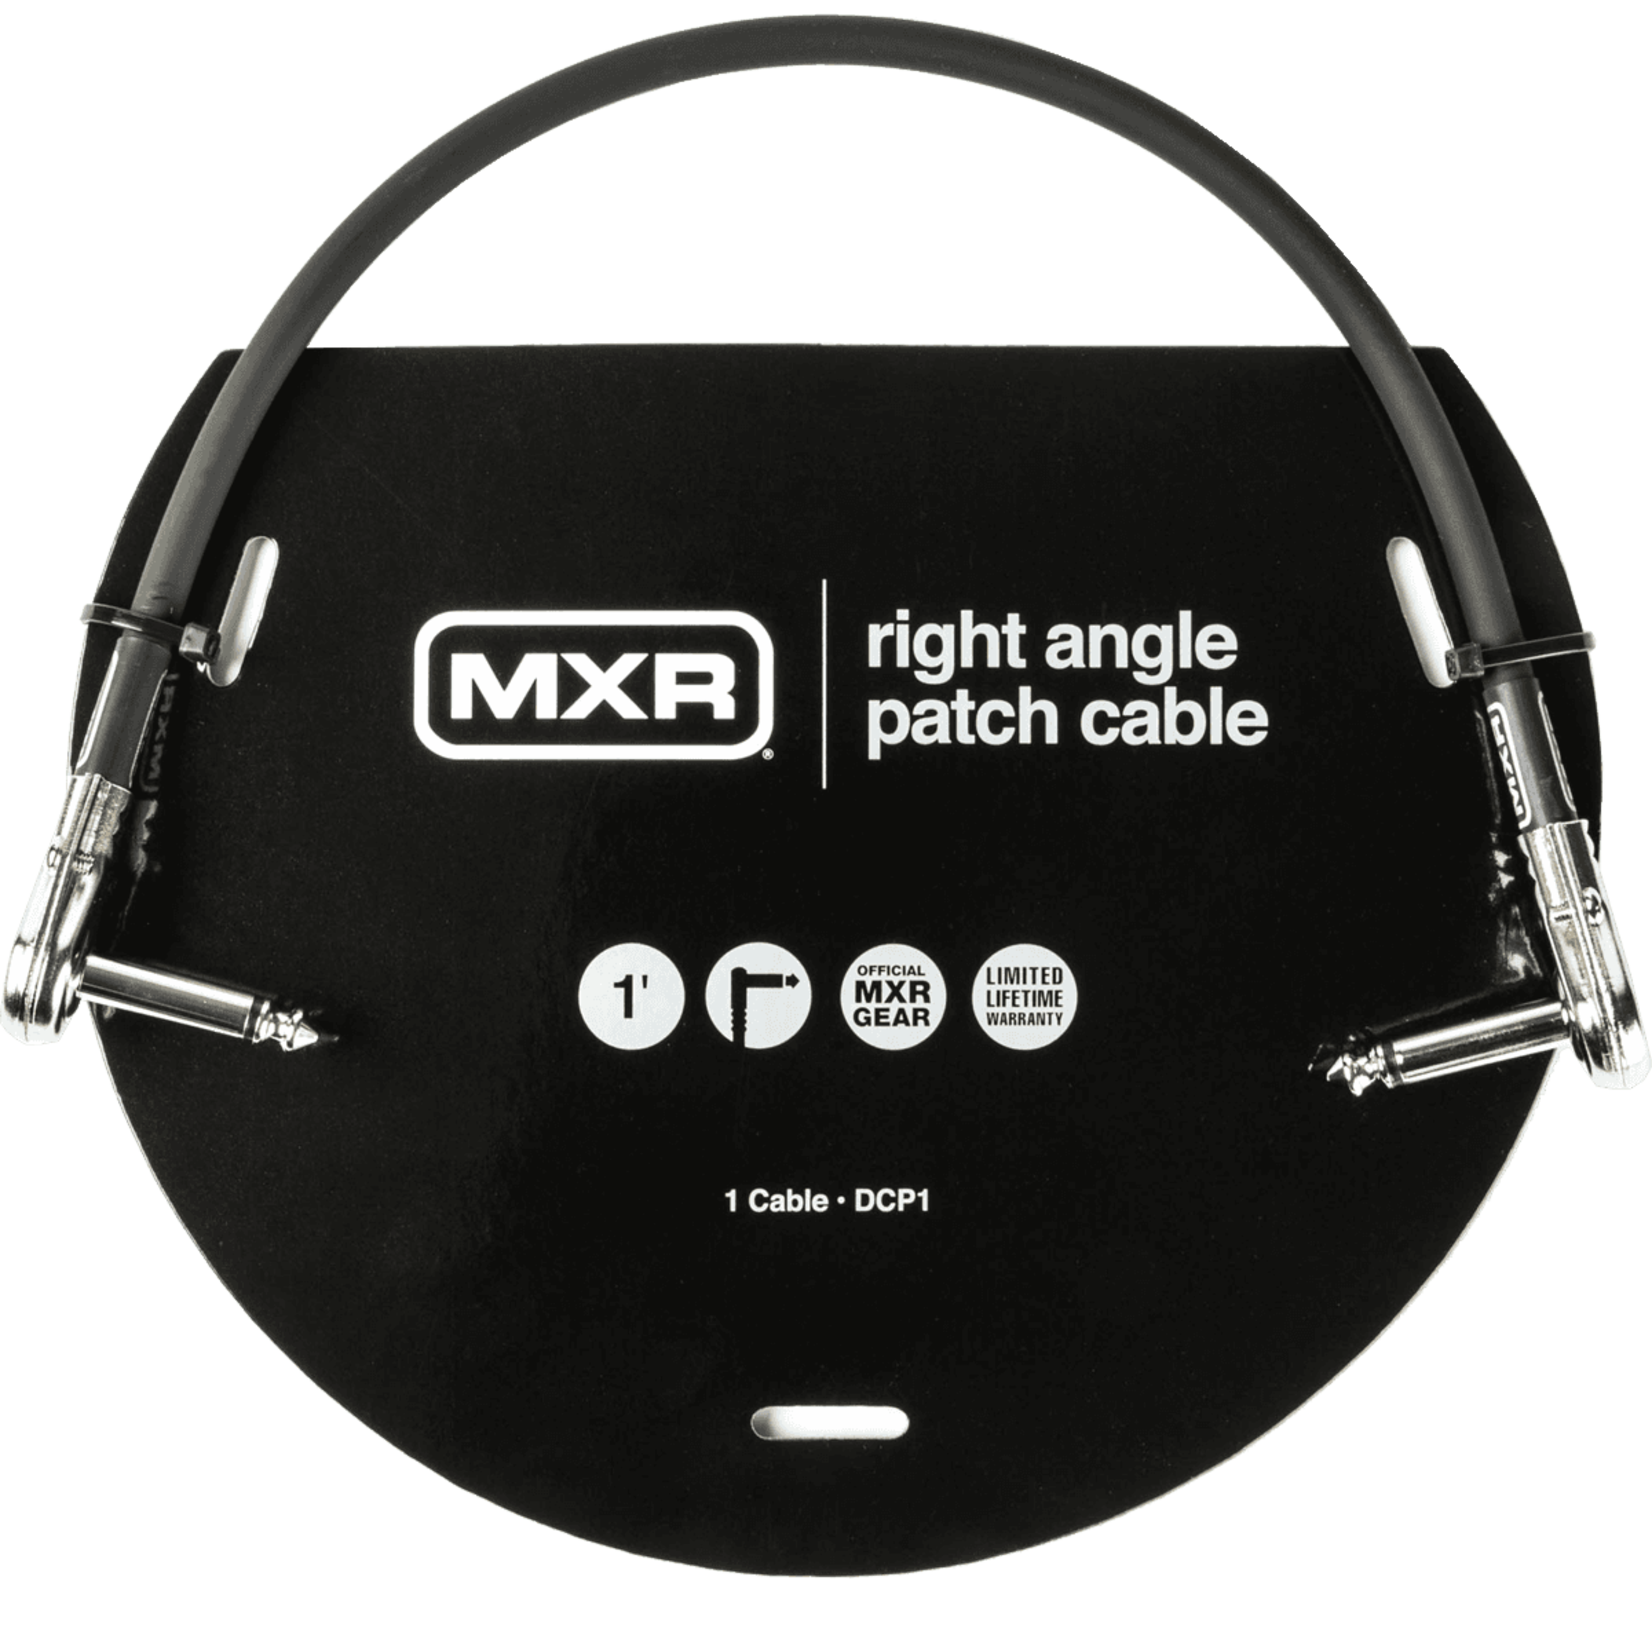 MXR MXR right angle patch cable 30 cm